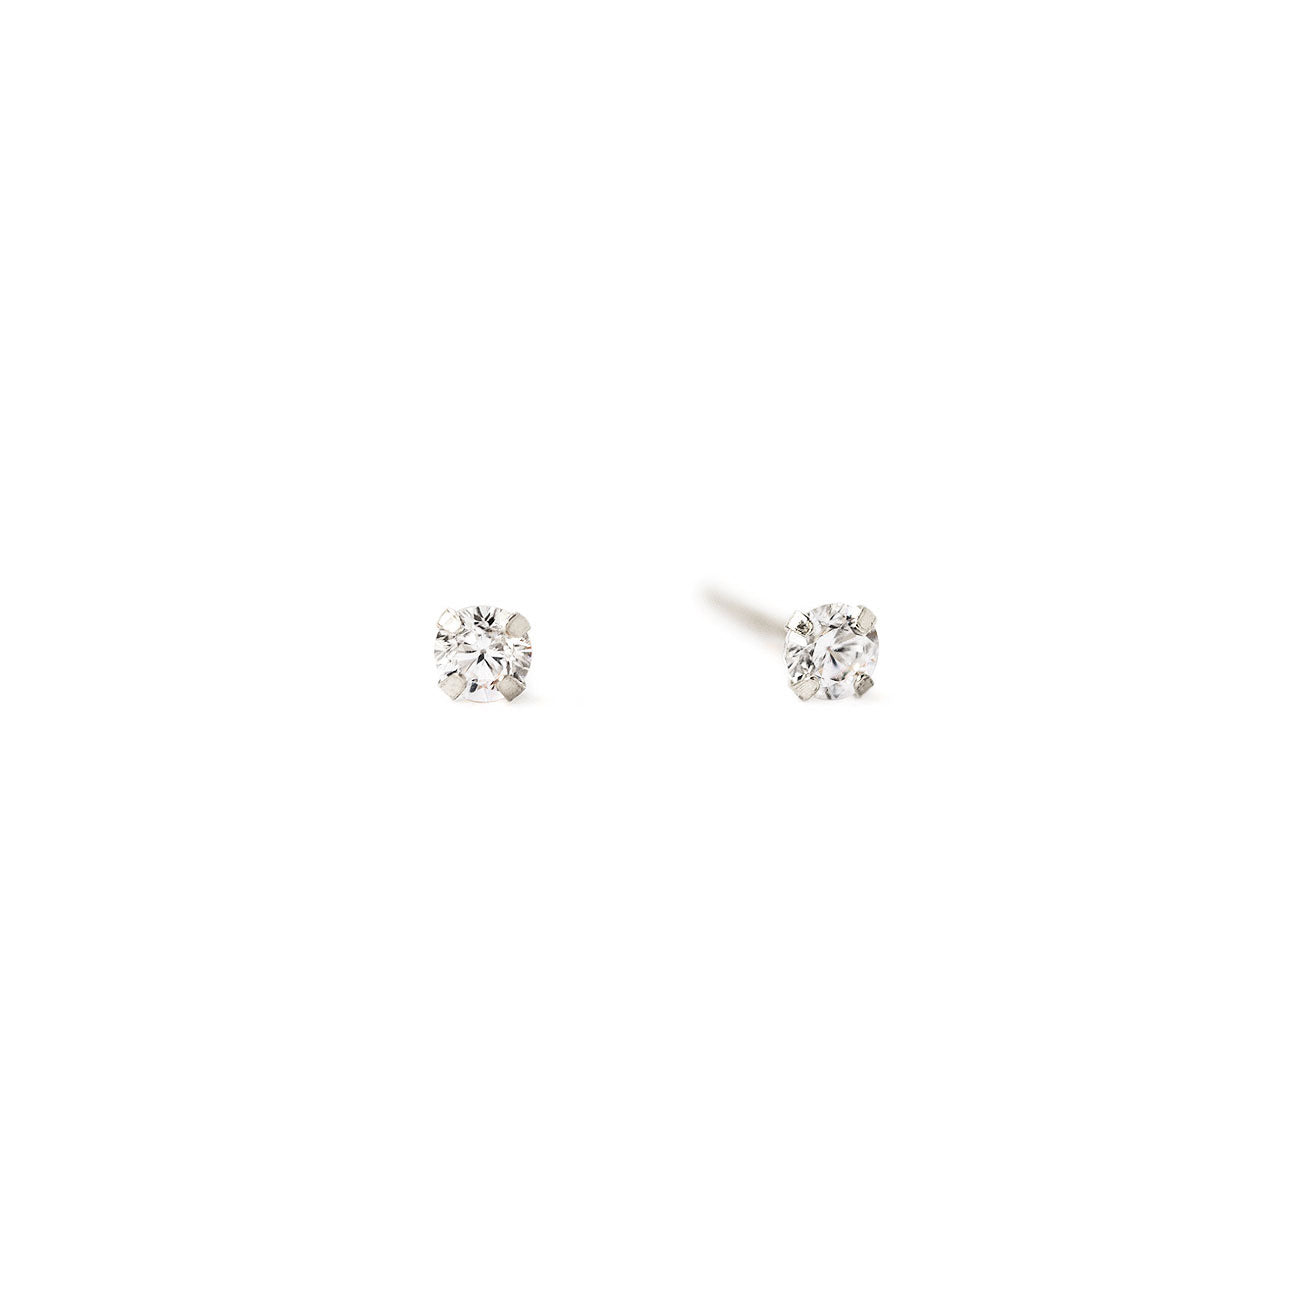 Birthstone Stud Earrings, 14K White Gold, Screwback Earrings